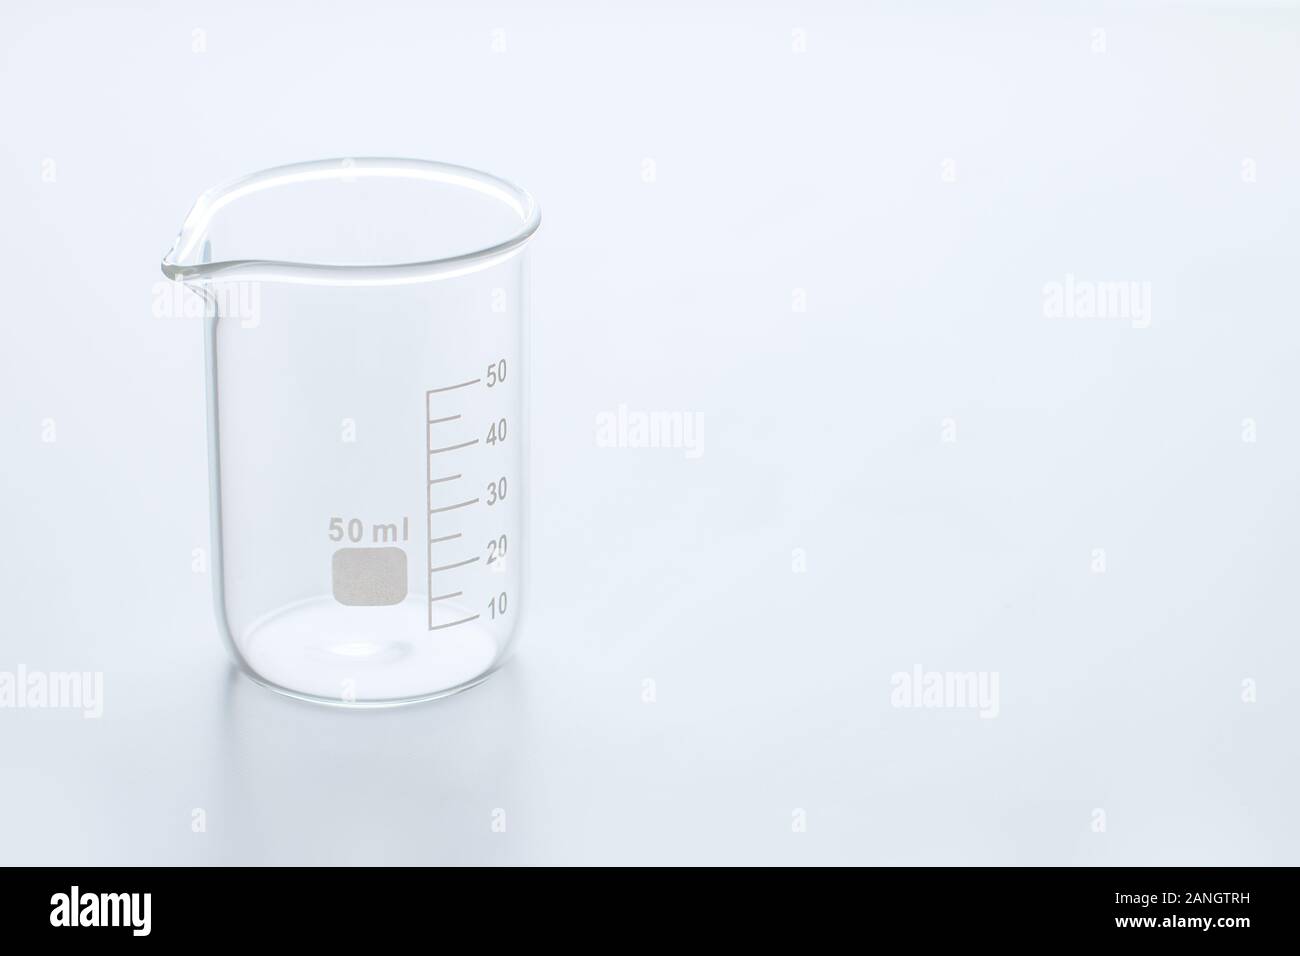 https://c8.alamy.com/comp/2ANGTRH/an-empty-transparent-glass-50-ml-beaker-on-a-white-background-2ANGTRH.jpg